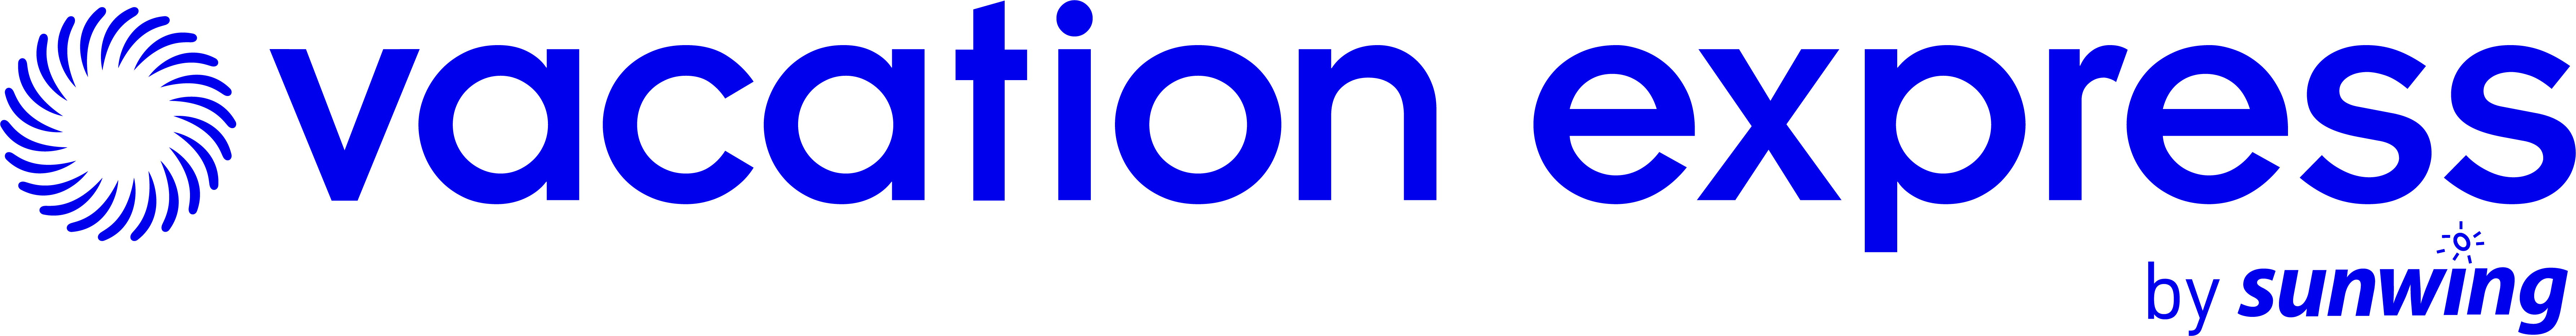 VE Logo by Sunwing Blue.png